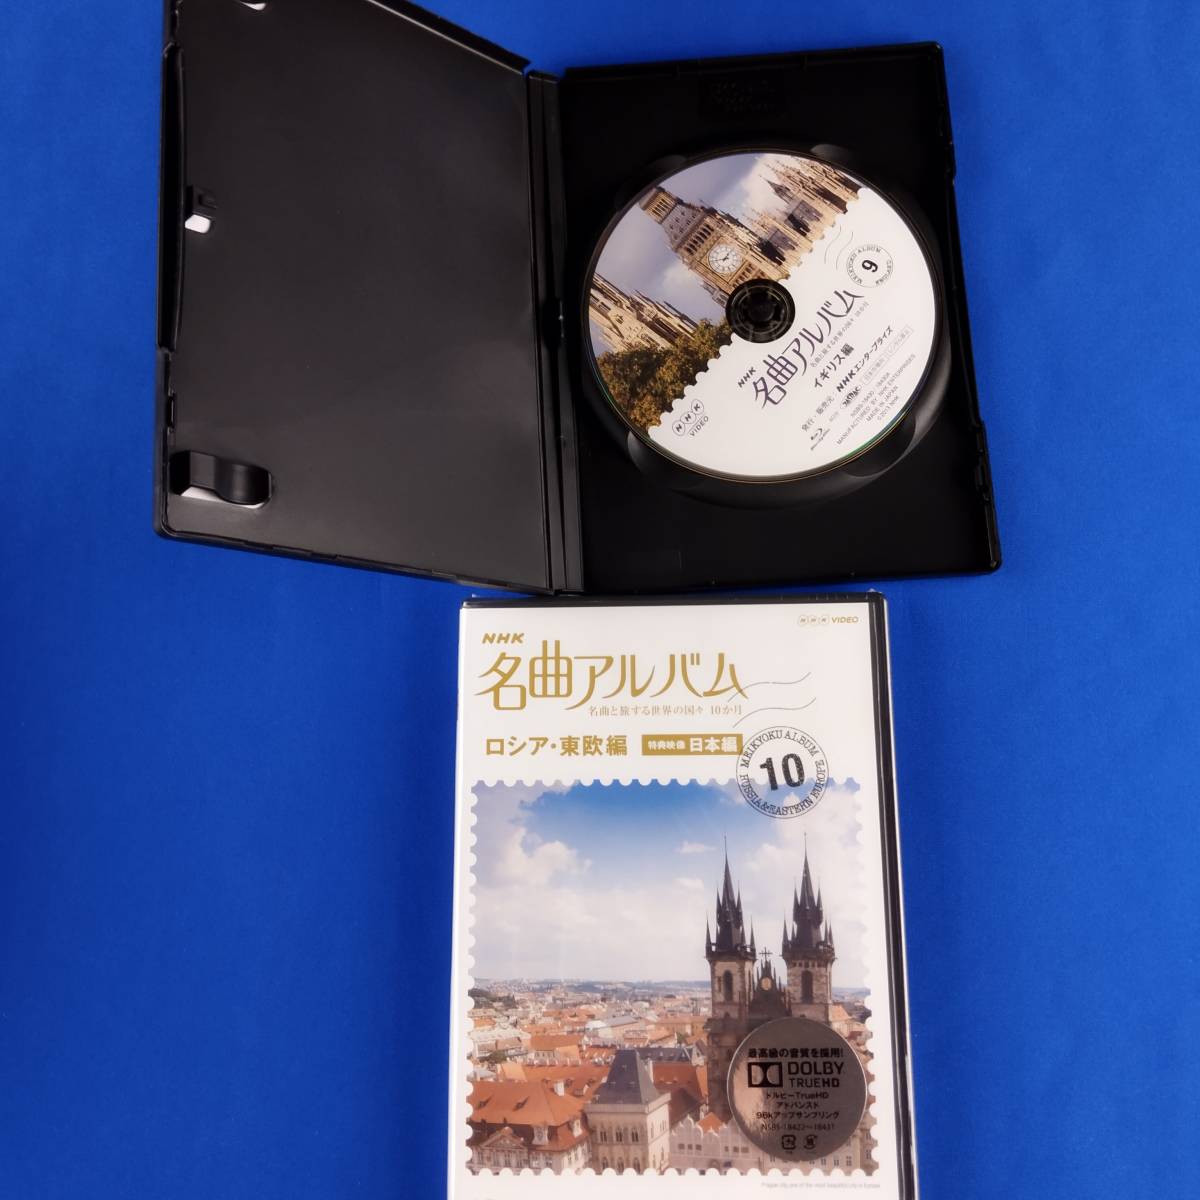 4SD1 Blu-ray NHK 名曲アルバム 名曲と旅する世界の国々 10か月